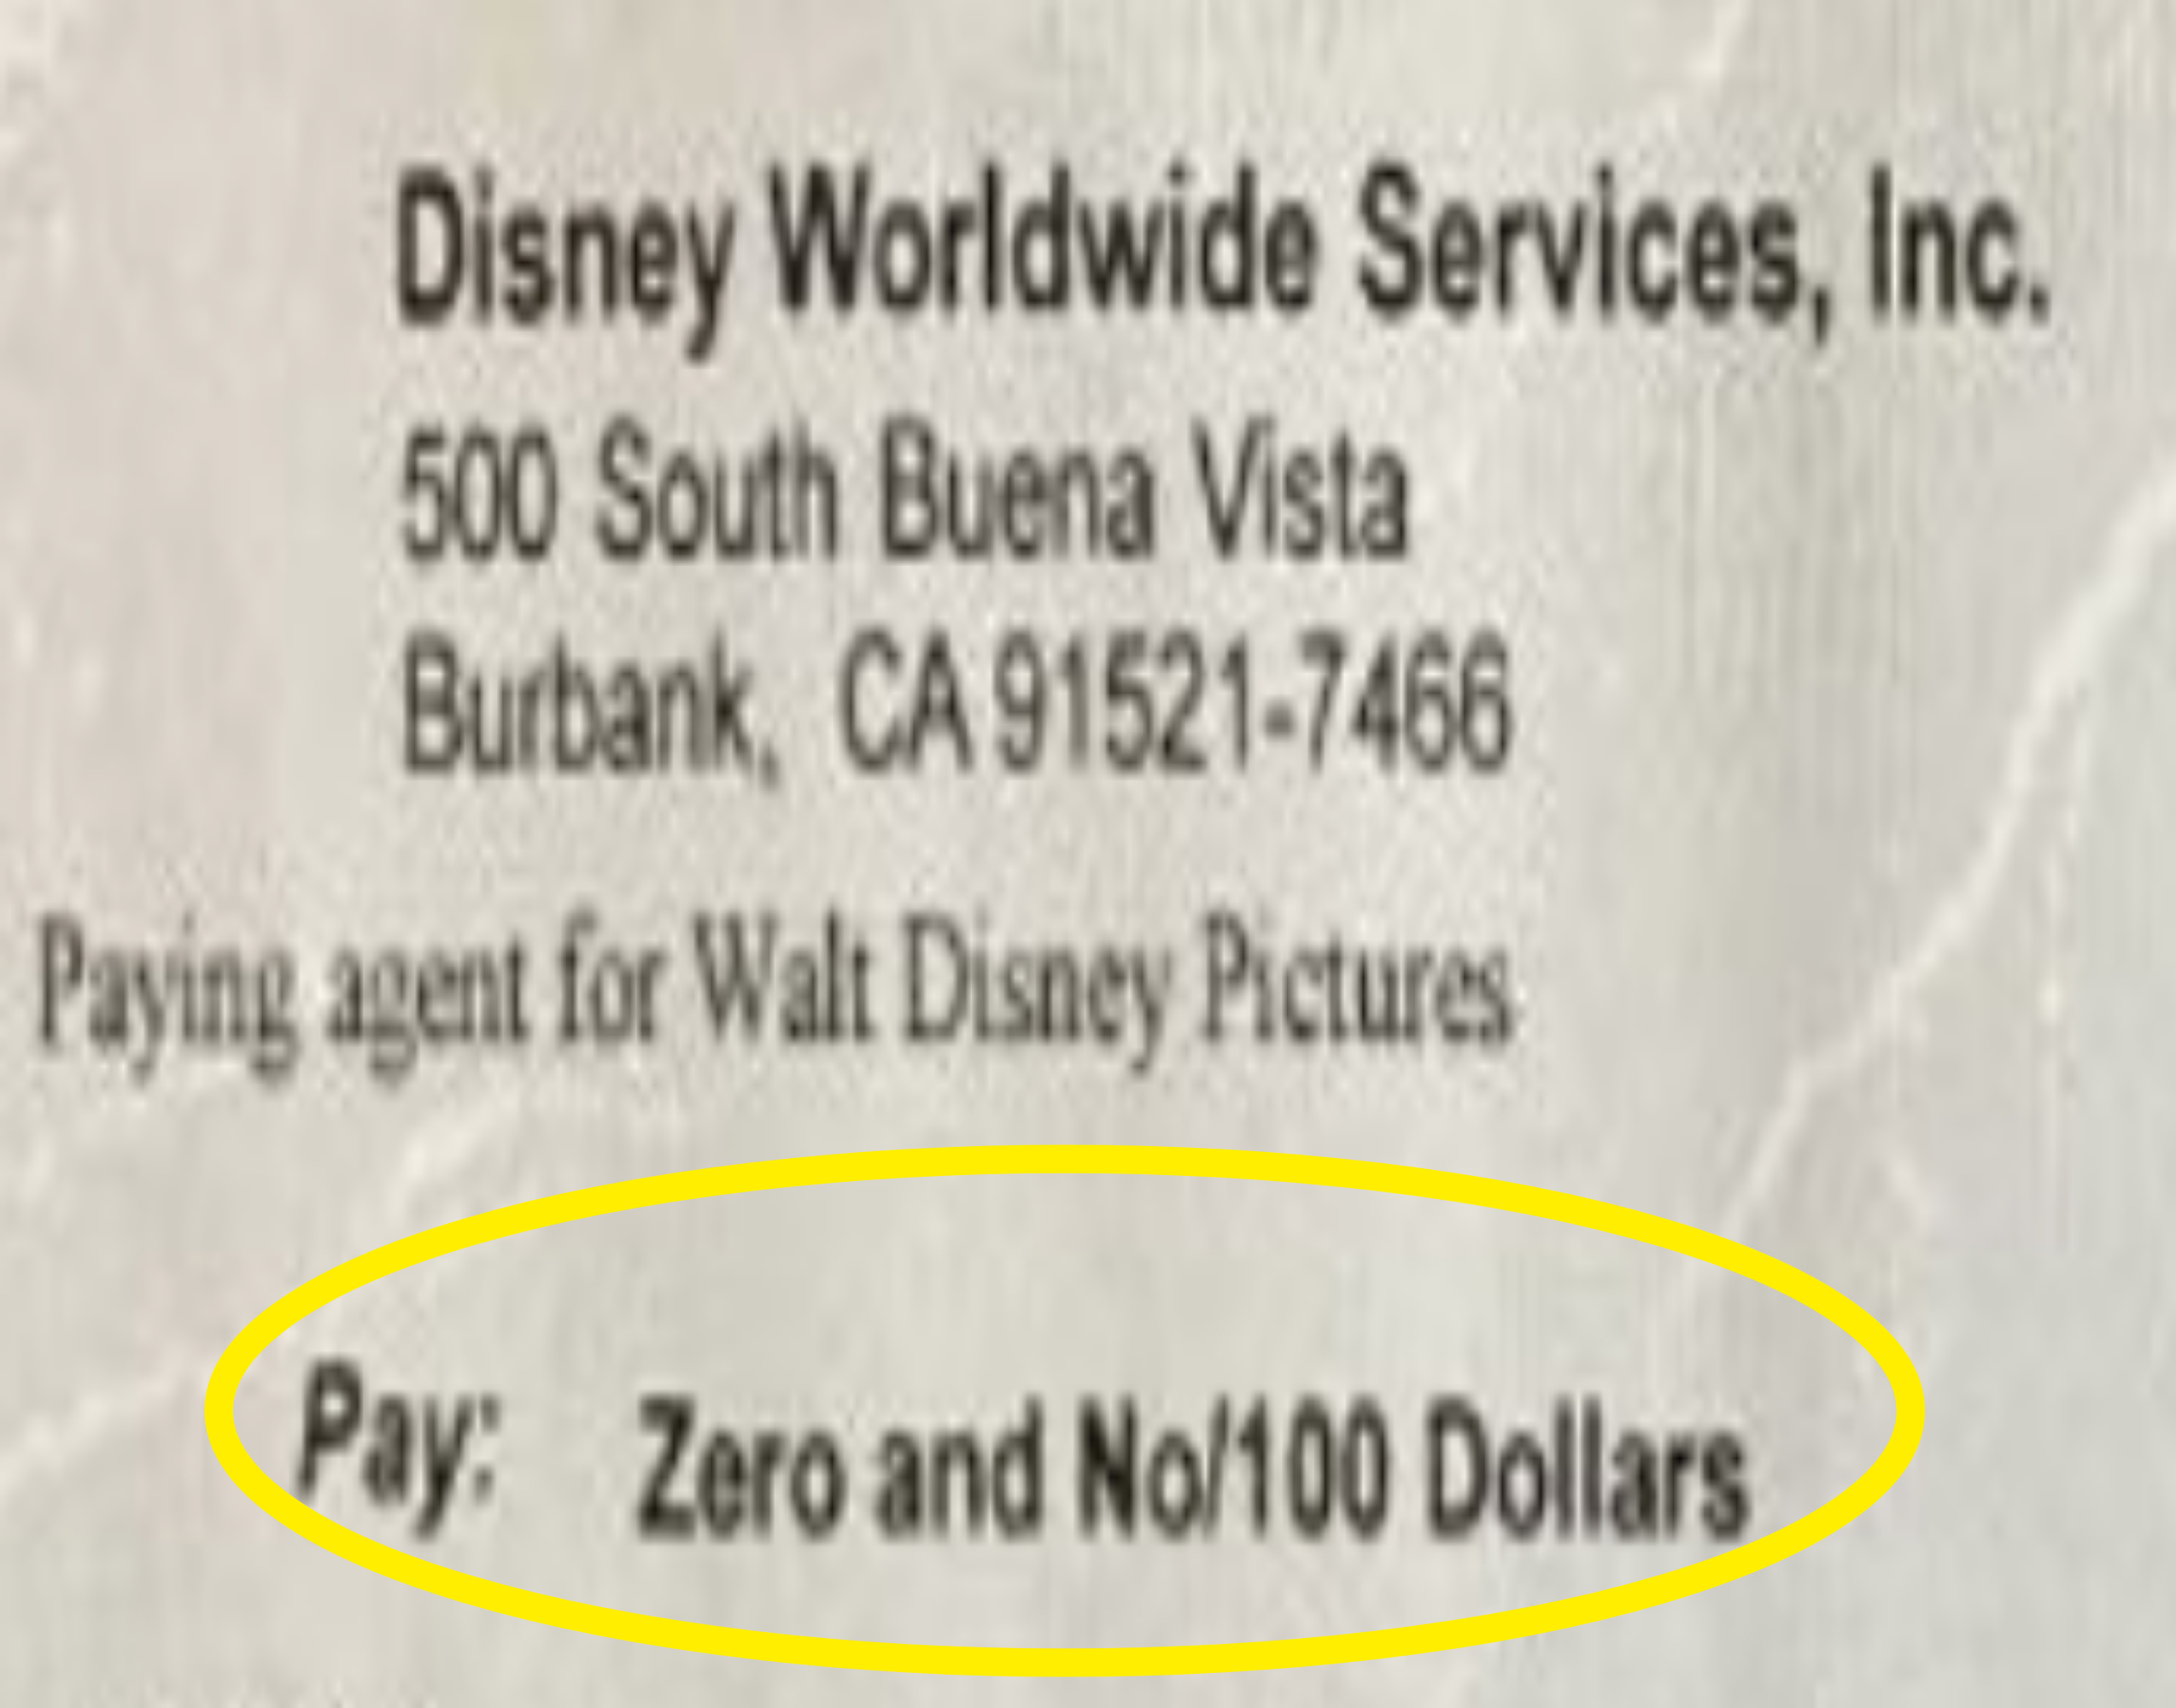 Check says Zero and No/100 Dollars